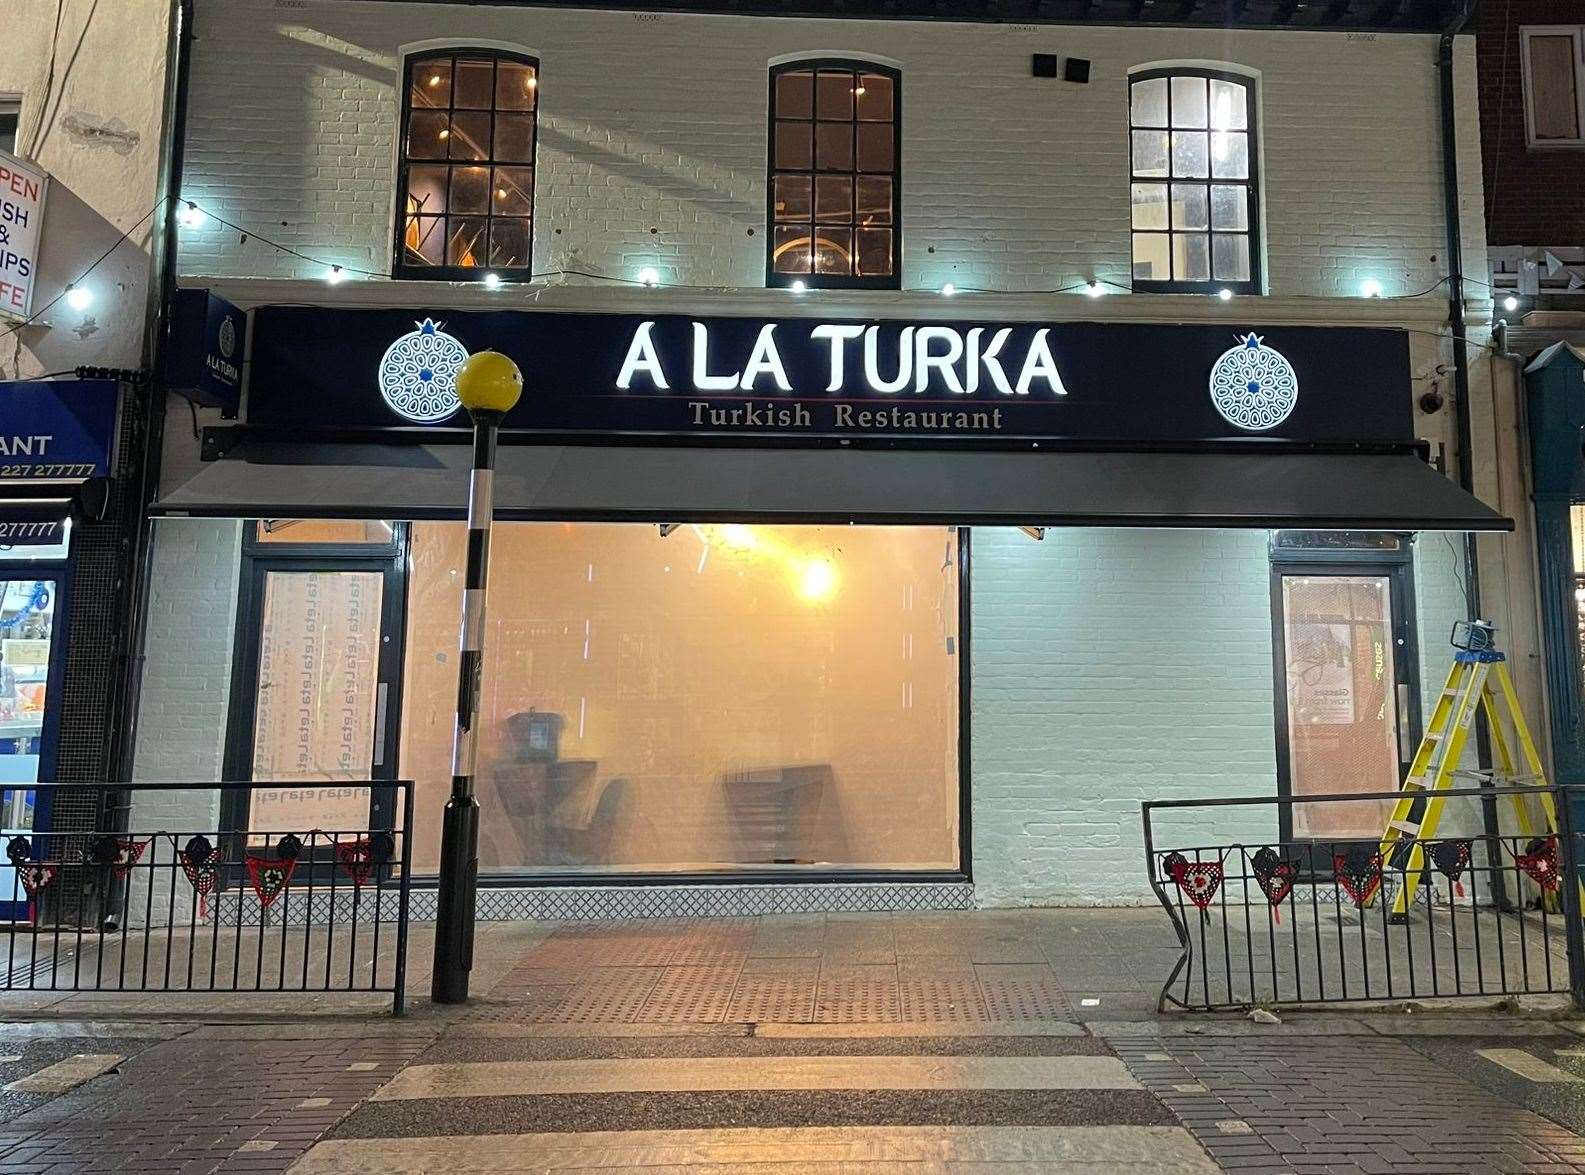 Turkish restaurant A La Turka is opening in Whitstable High Street before Christmas. Picture: Mehmet Dari